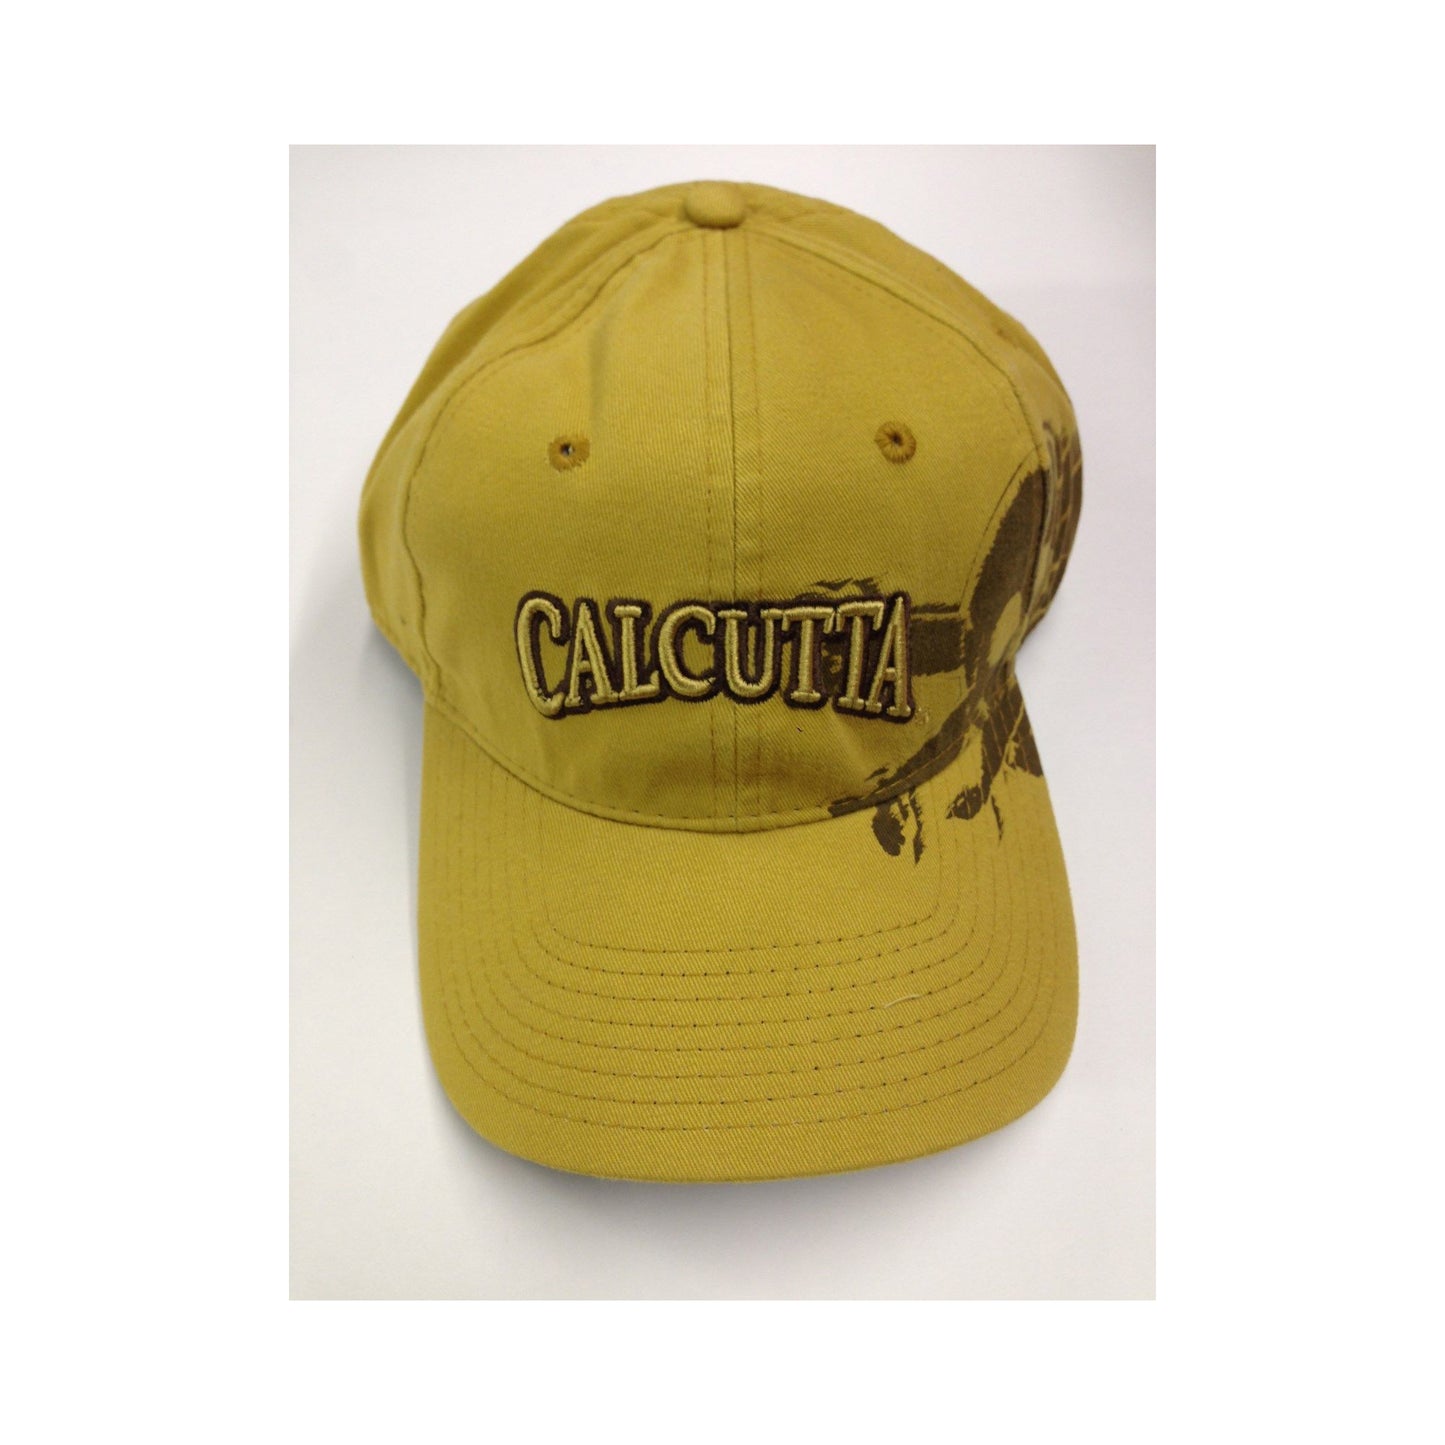 New Authentic Calcutta Hat Gold